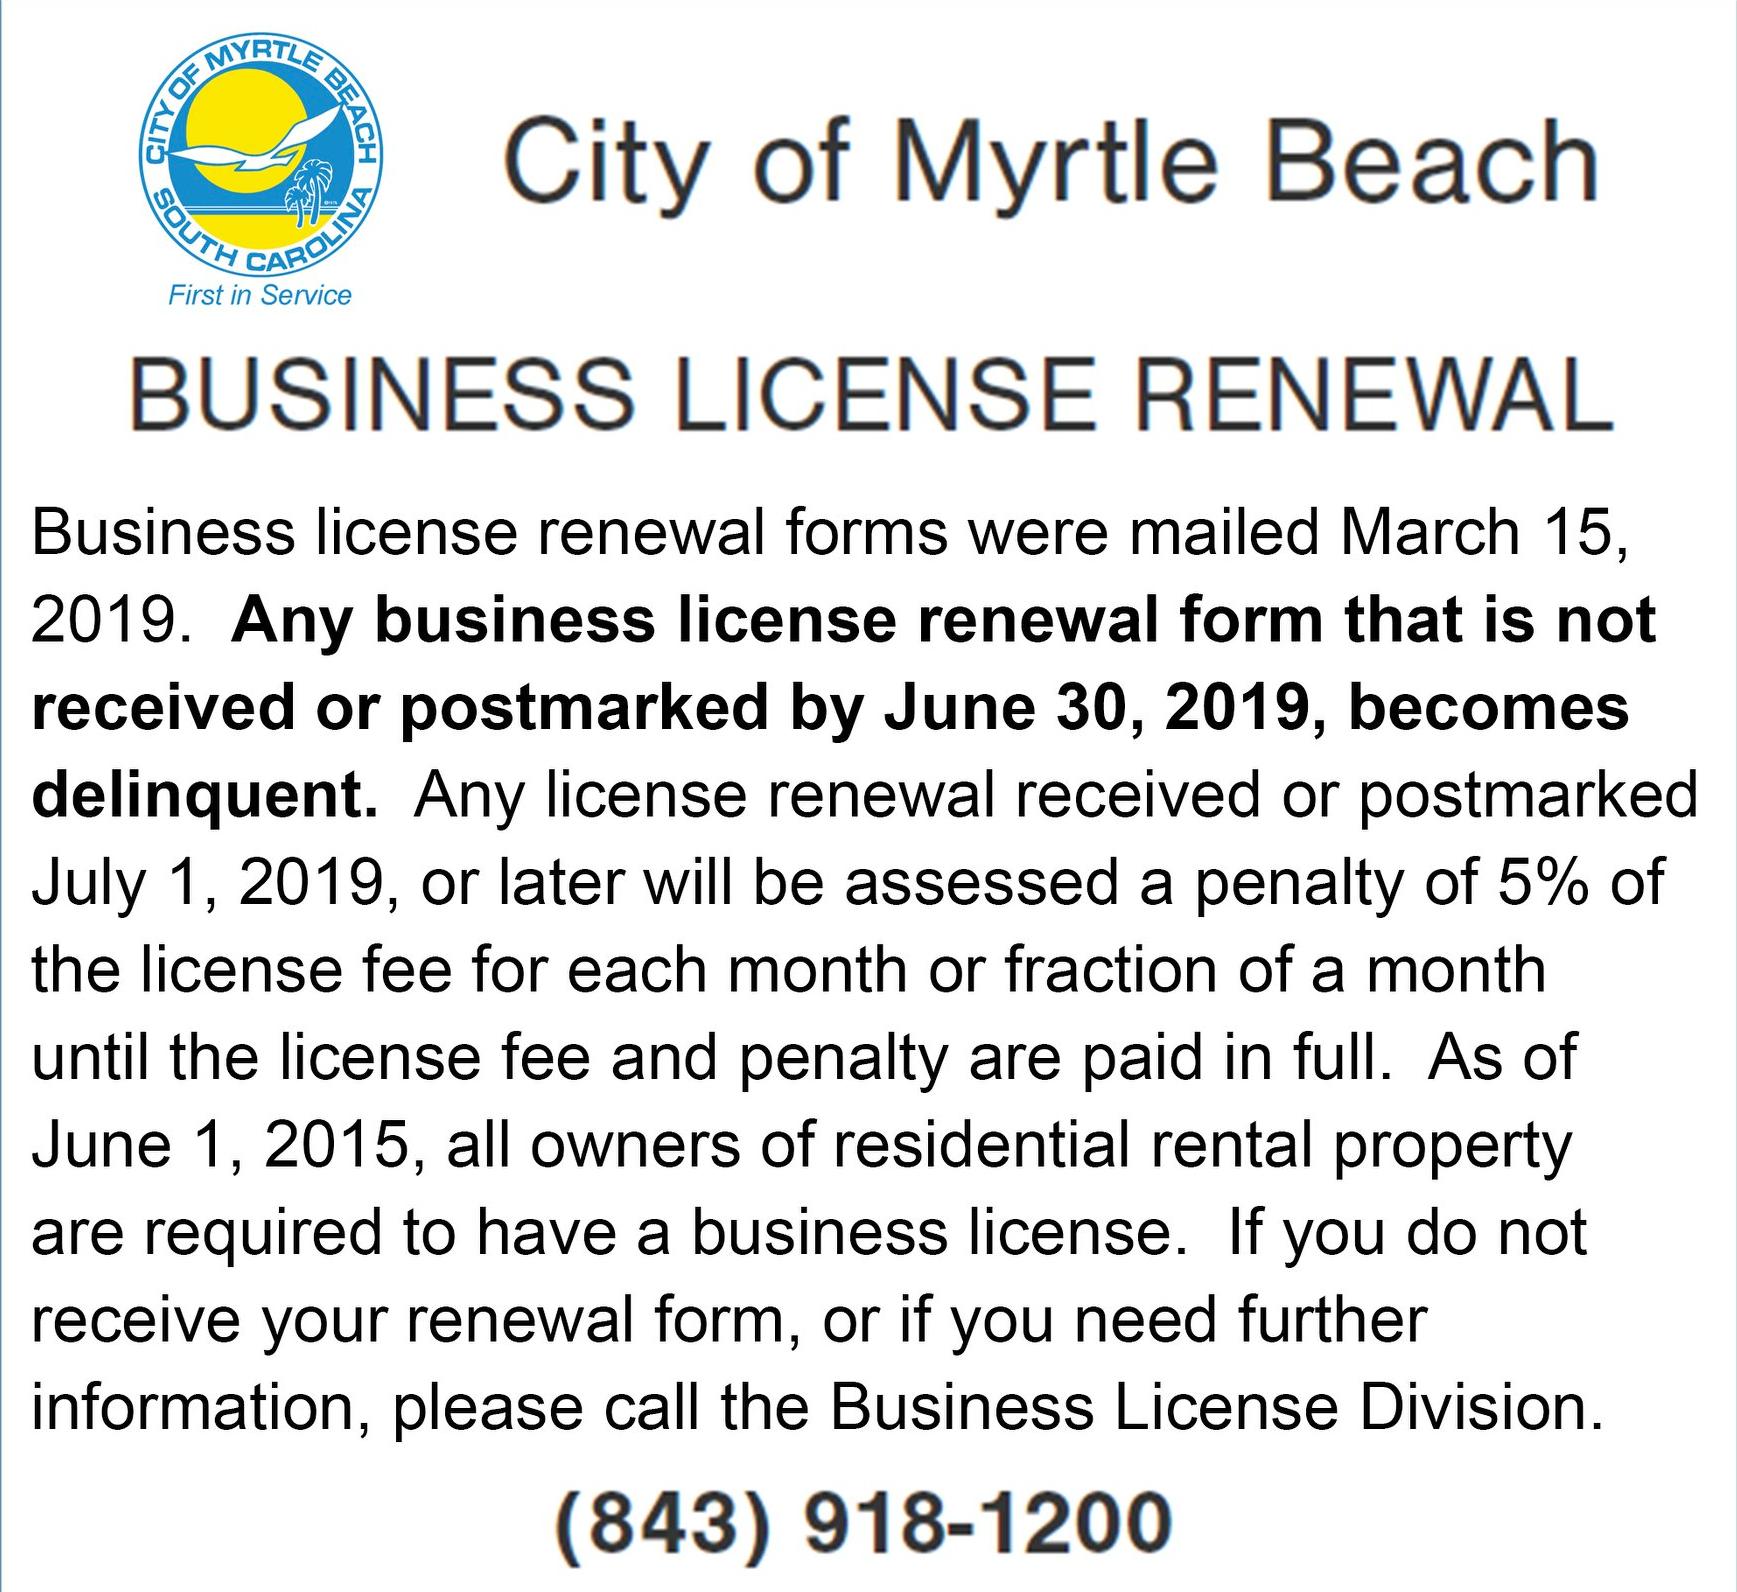 Business License Renewal 2019 - Copy